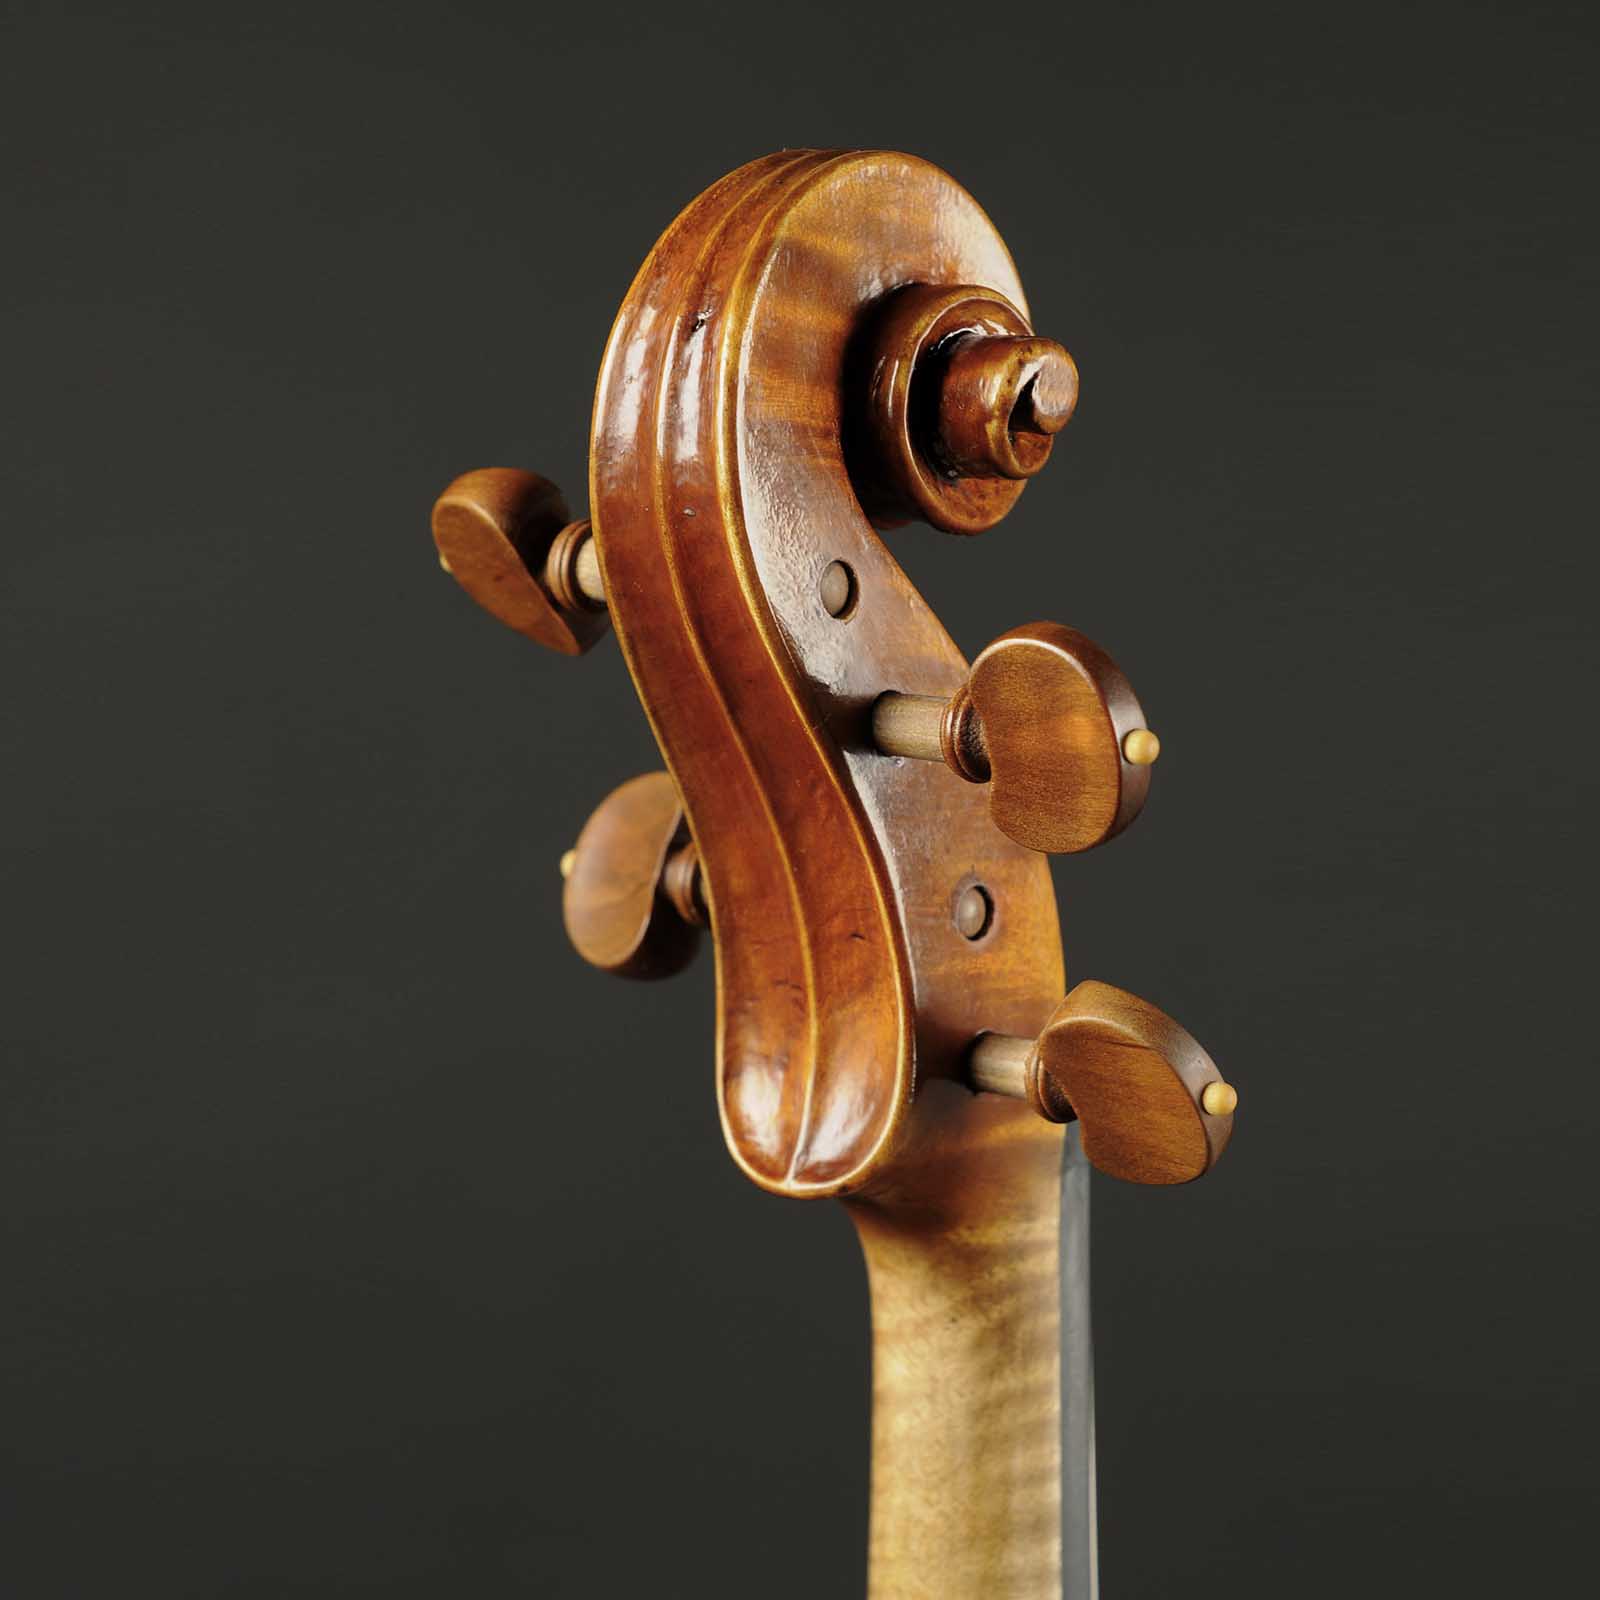 Antonio Stradivari Cremona 1672 “Renaissance Wood“ cm 42 - Image 7